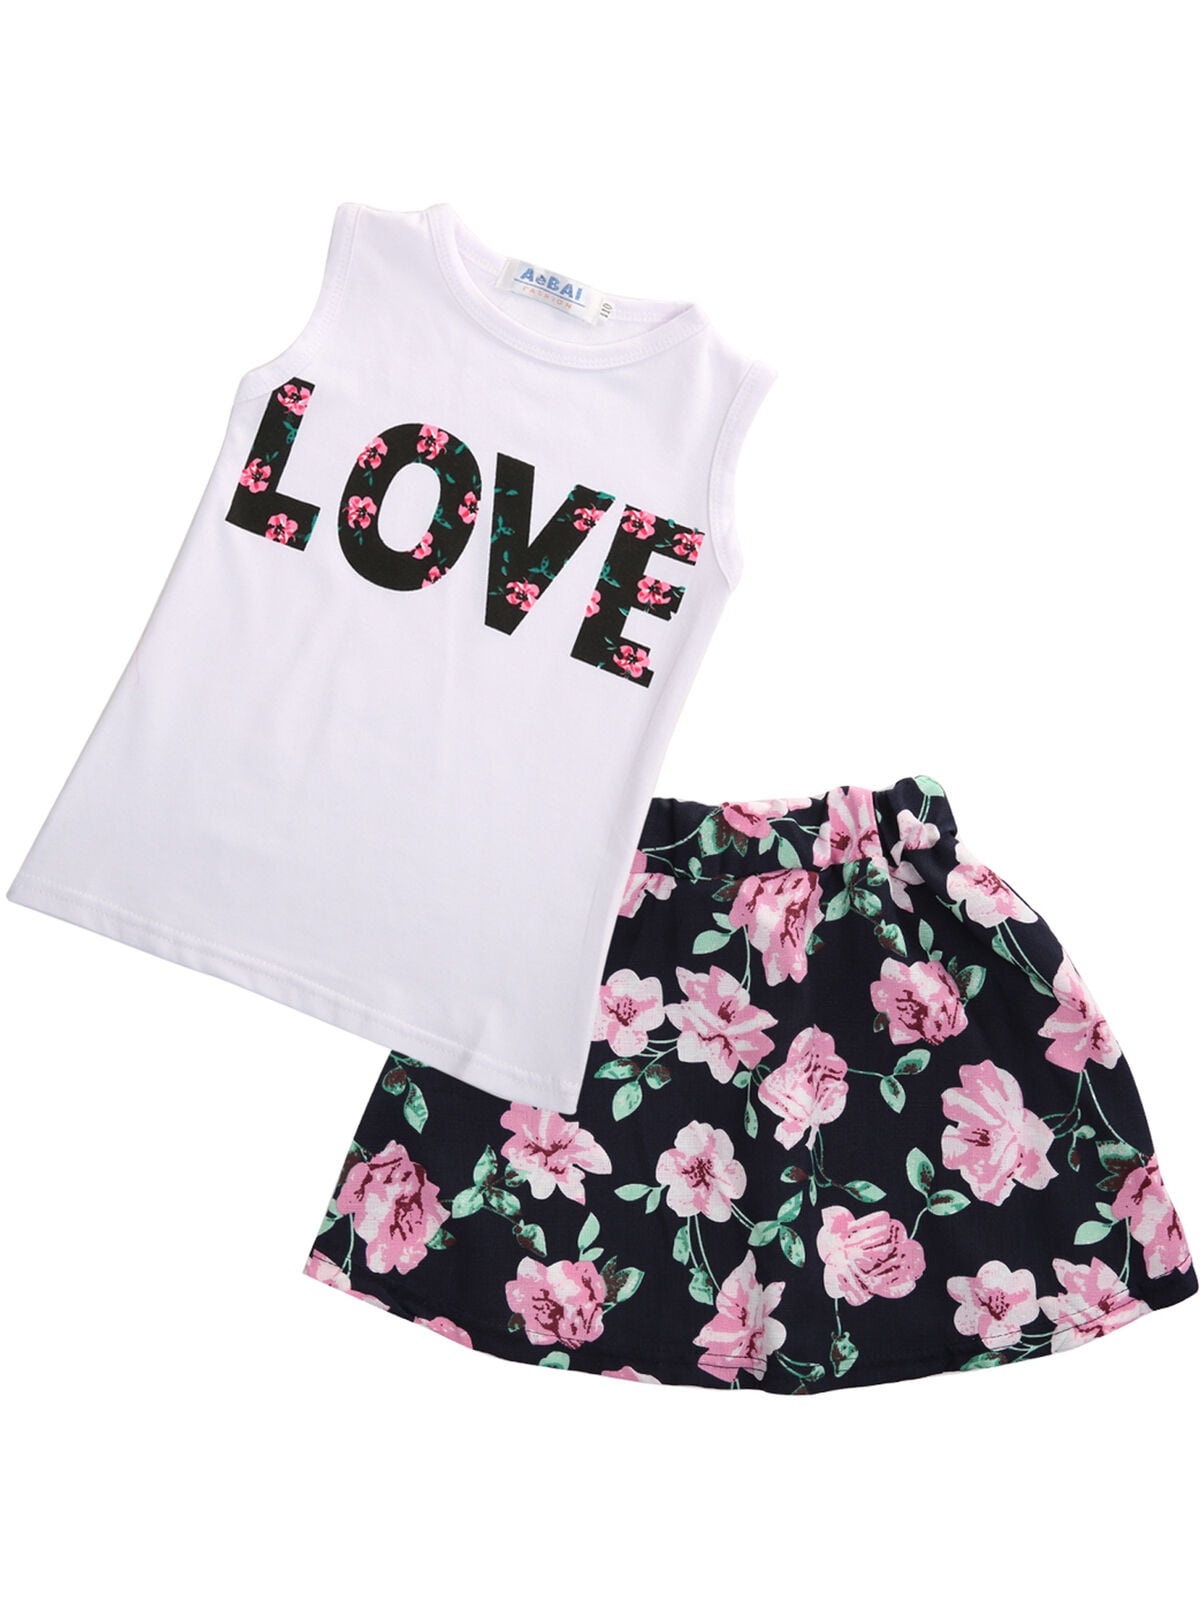 UK Baby Kids Girl Dress Tank Vest Tops T-Shirt Skirt Outfit Set Dresses Clothes 